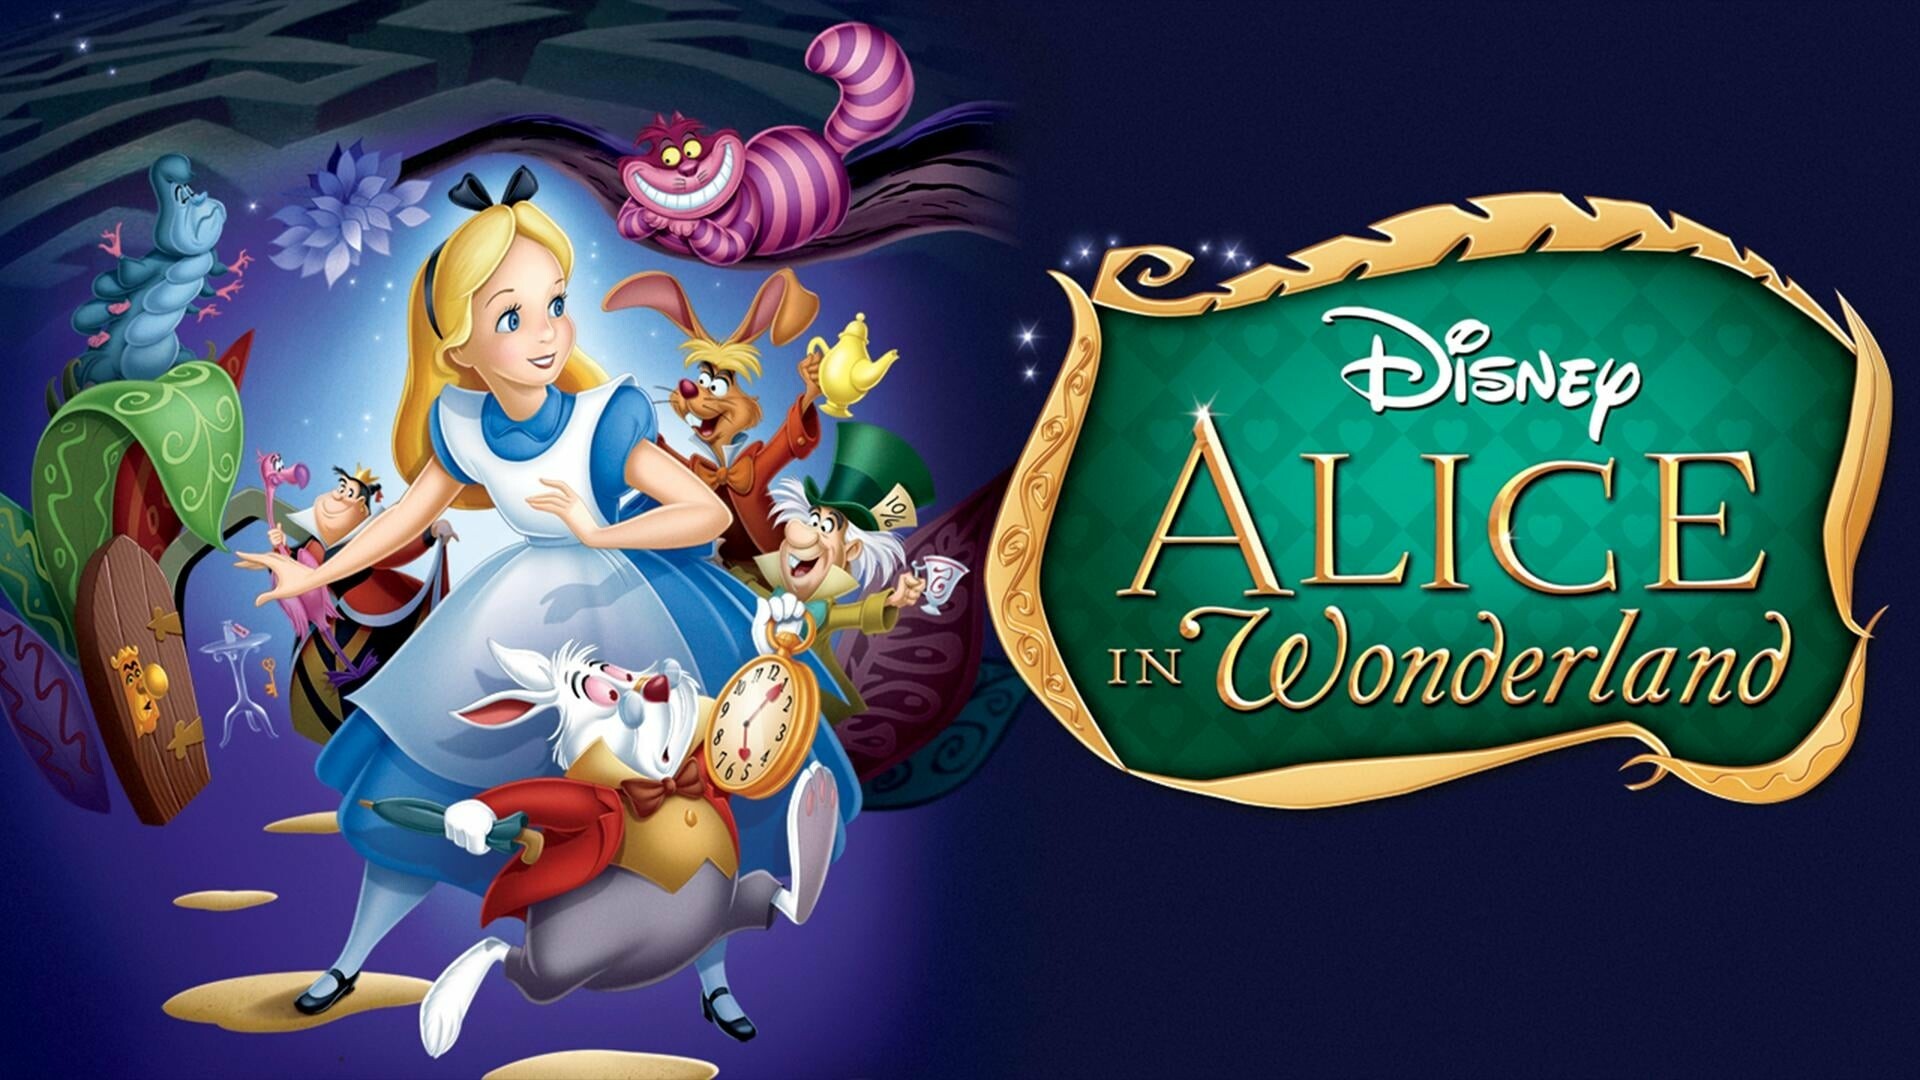 Alice In Wonderland (Cartoon): Lewis Carroll's beloved fantasy tale, Family classic. 1920x1080 Full HD Wallpaper.